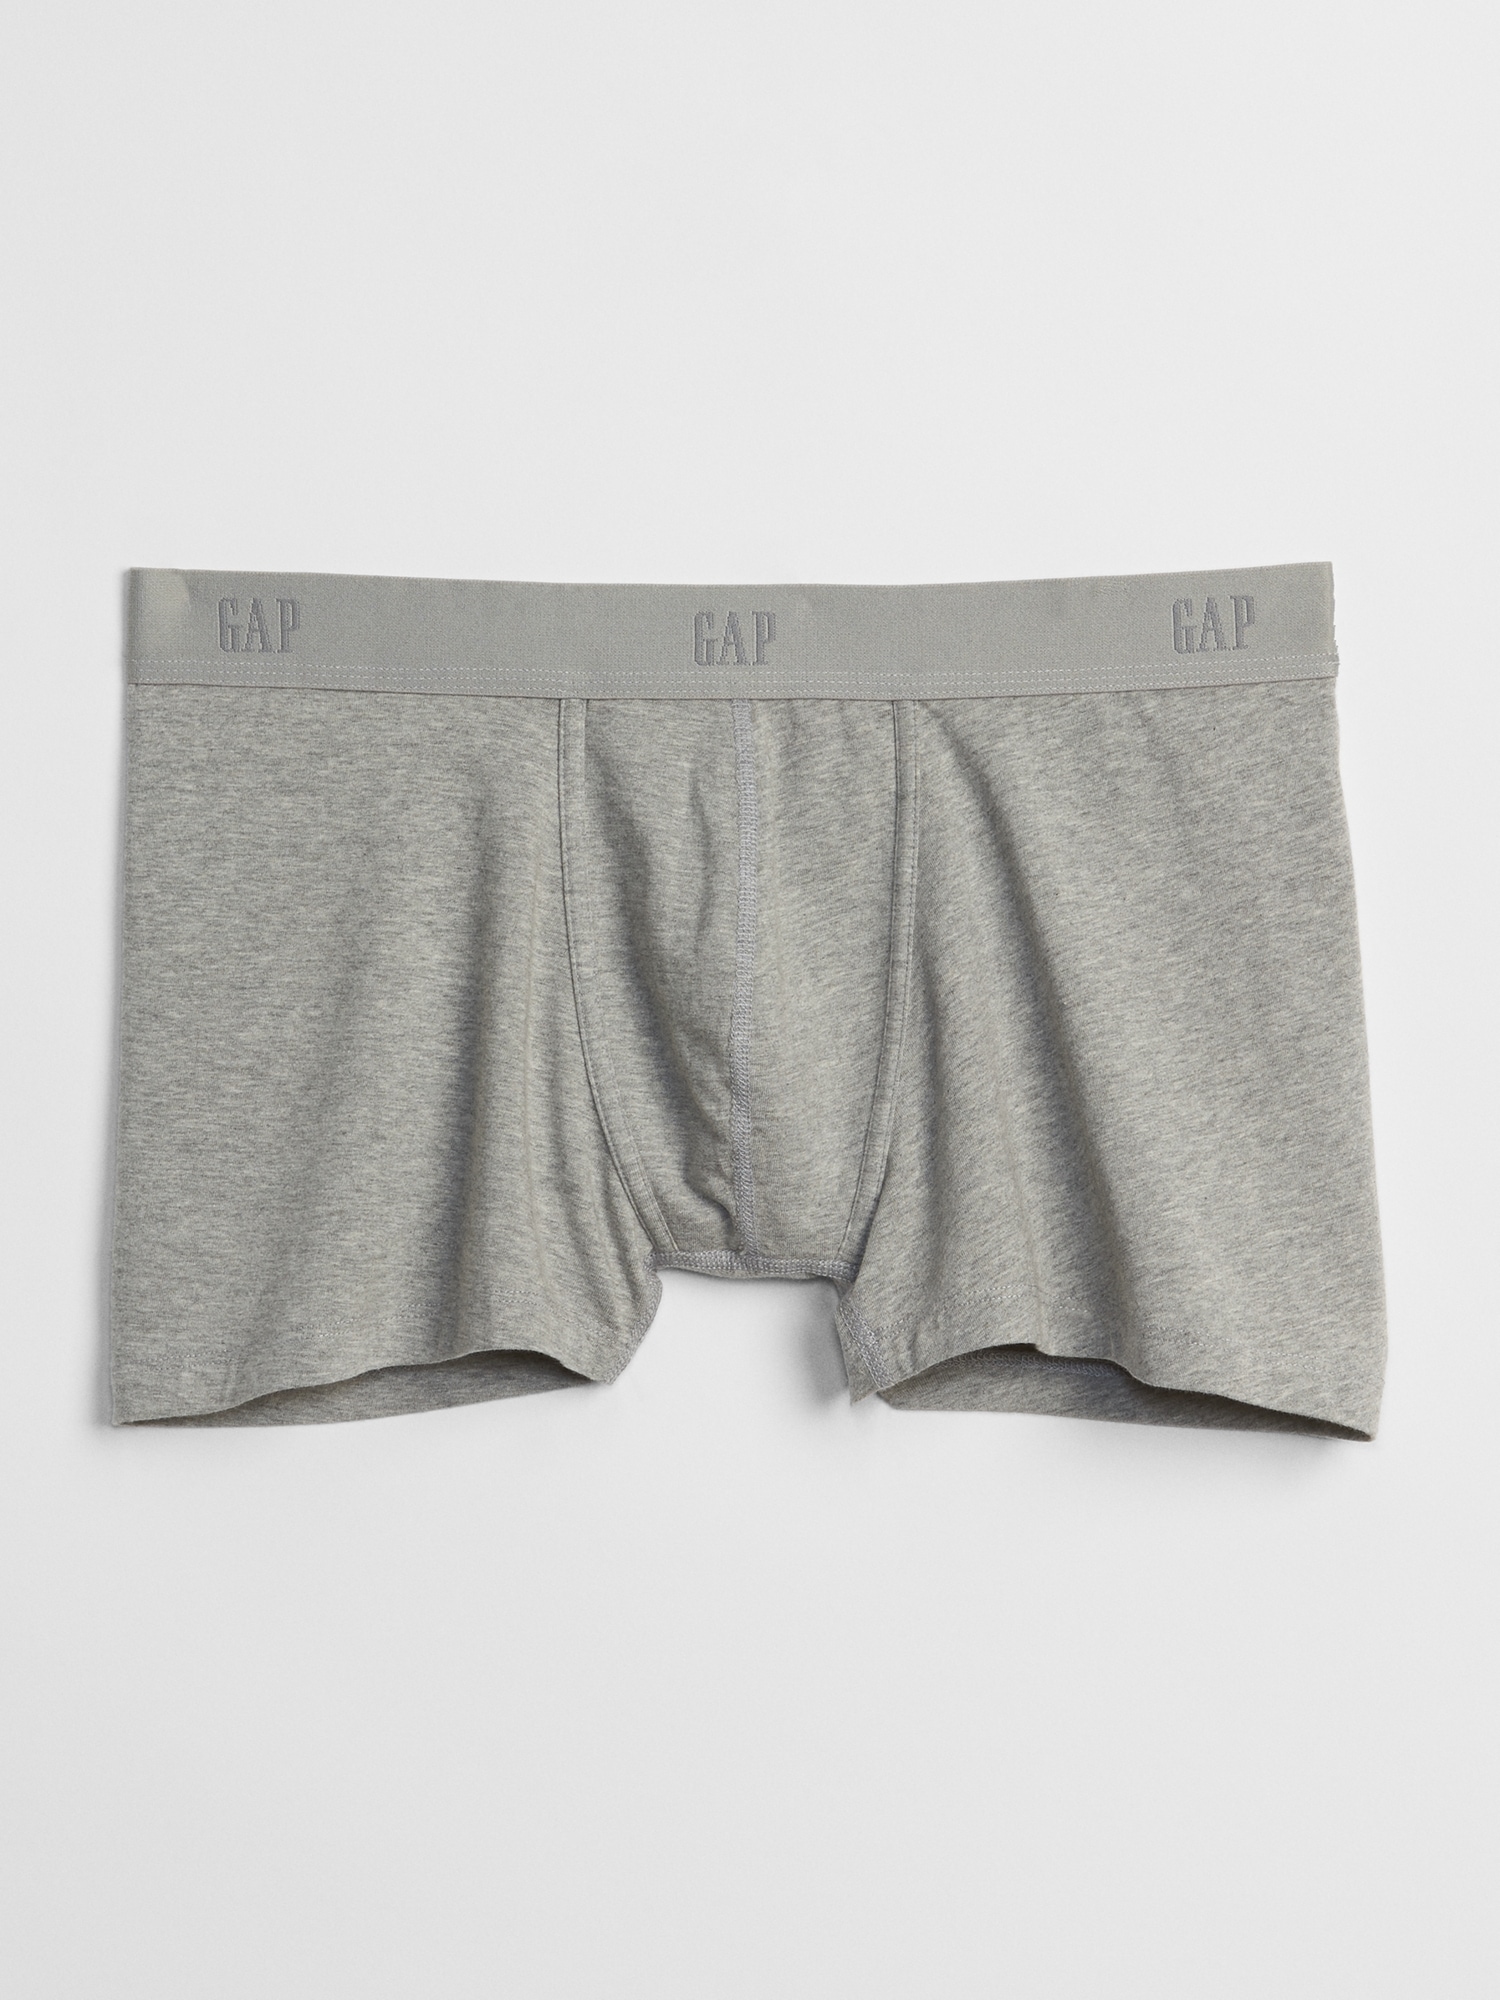 (2)Gap men's boxer briefs-size S-2 items-strips/SOLID GRAY-cotton/spandex